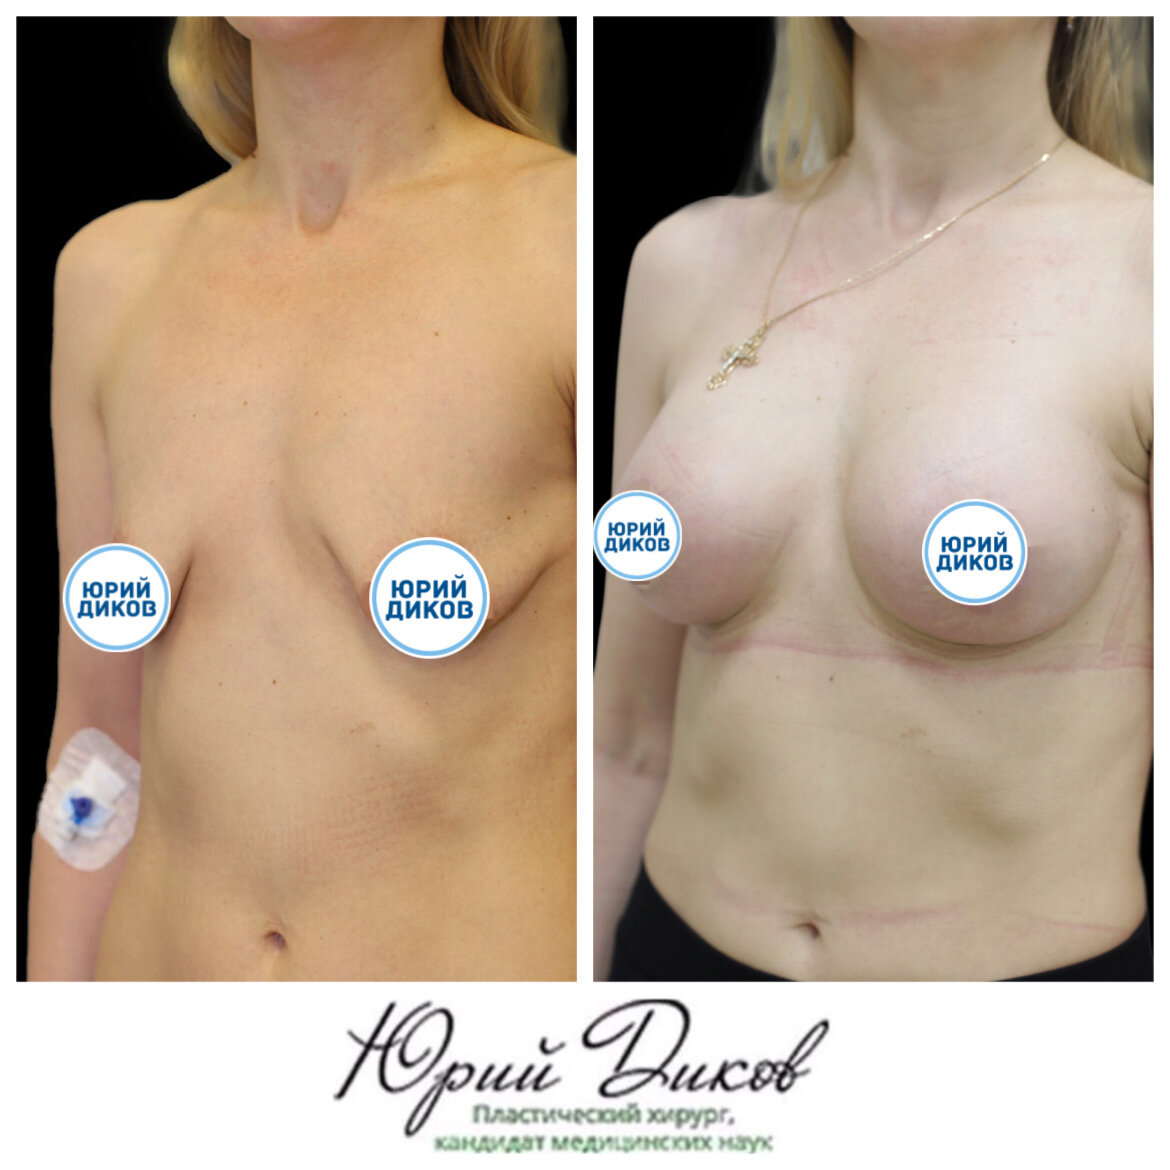 тубулярная деформация груди у женщин фото 23